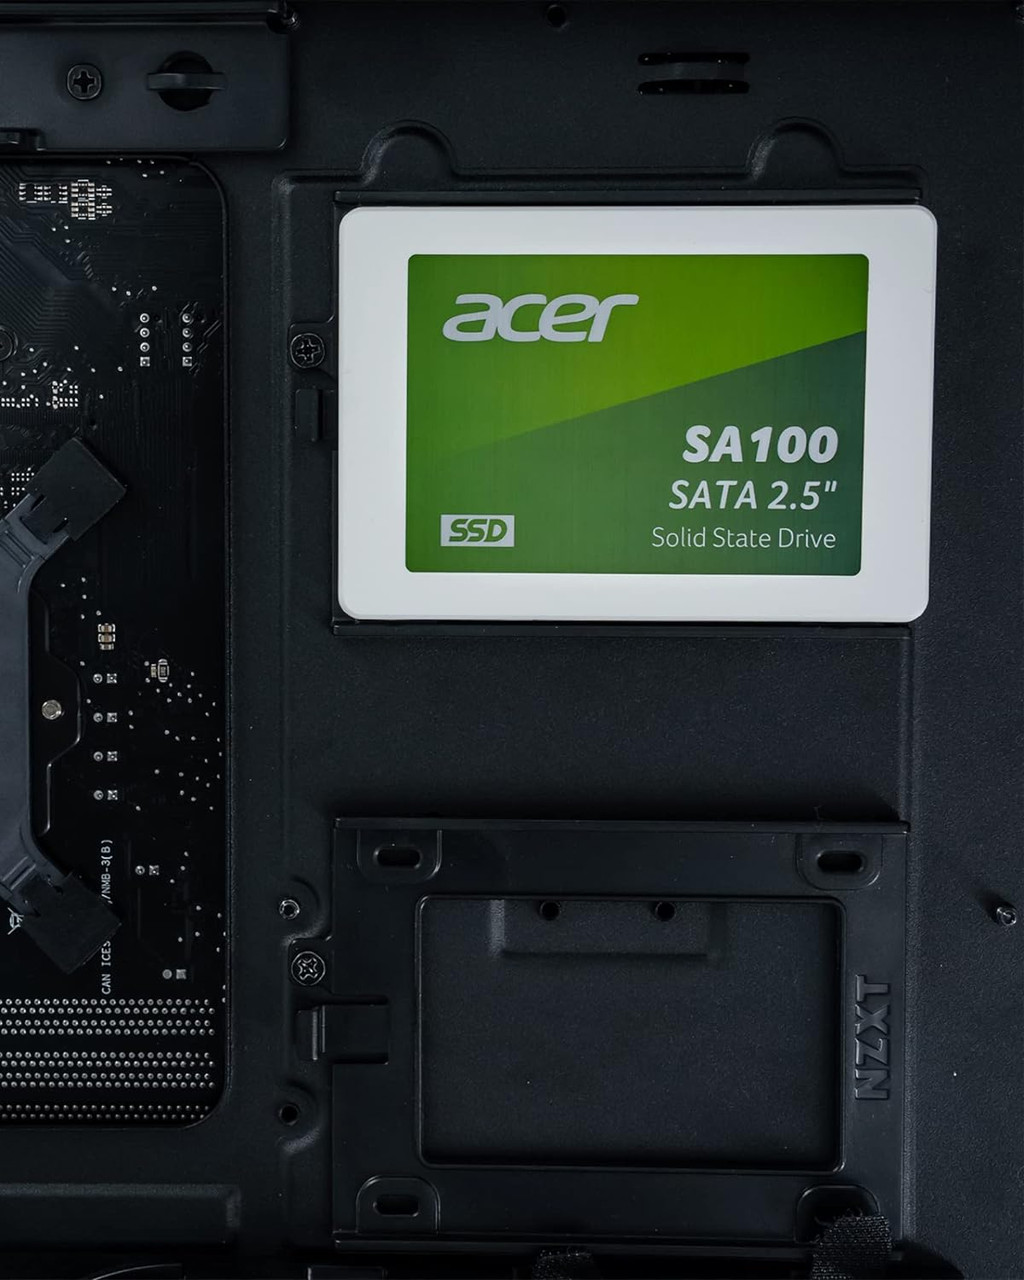 Acer SA100 480GB SATA III 2.5 Inch Internal SSD - 6 Gb/s, 3D NAND Solid State Hard Drive Up to 560 MB/s (BL.9BWWA.103)